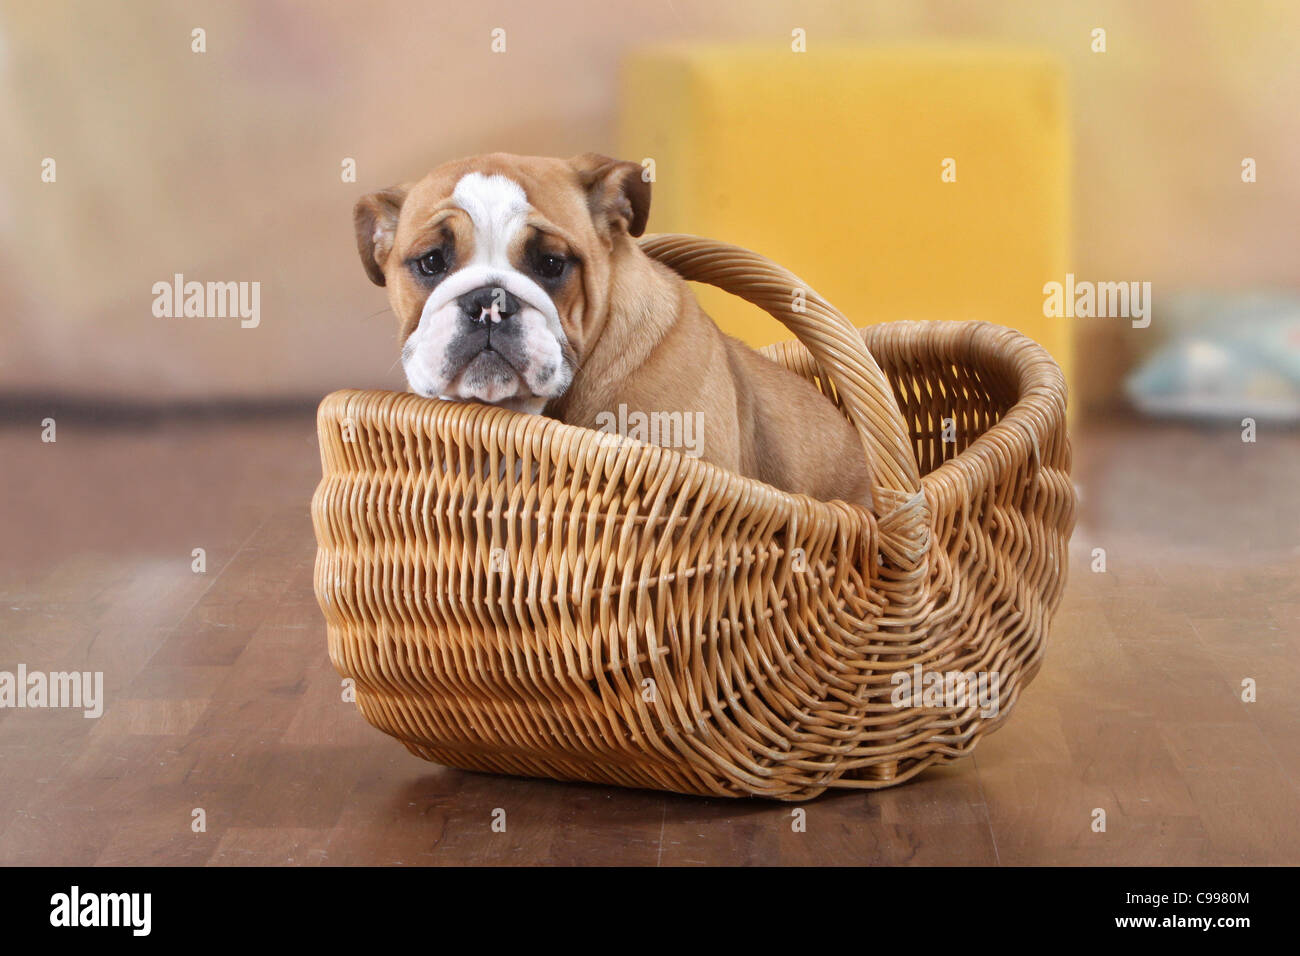 English bulldog puppy basket hi-res stock photography and images - Alamy